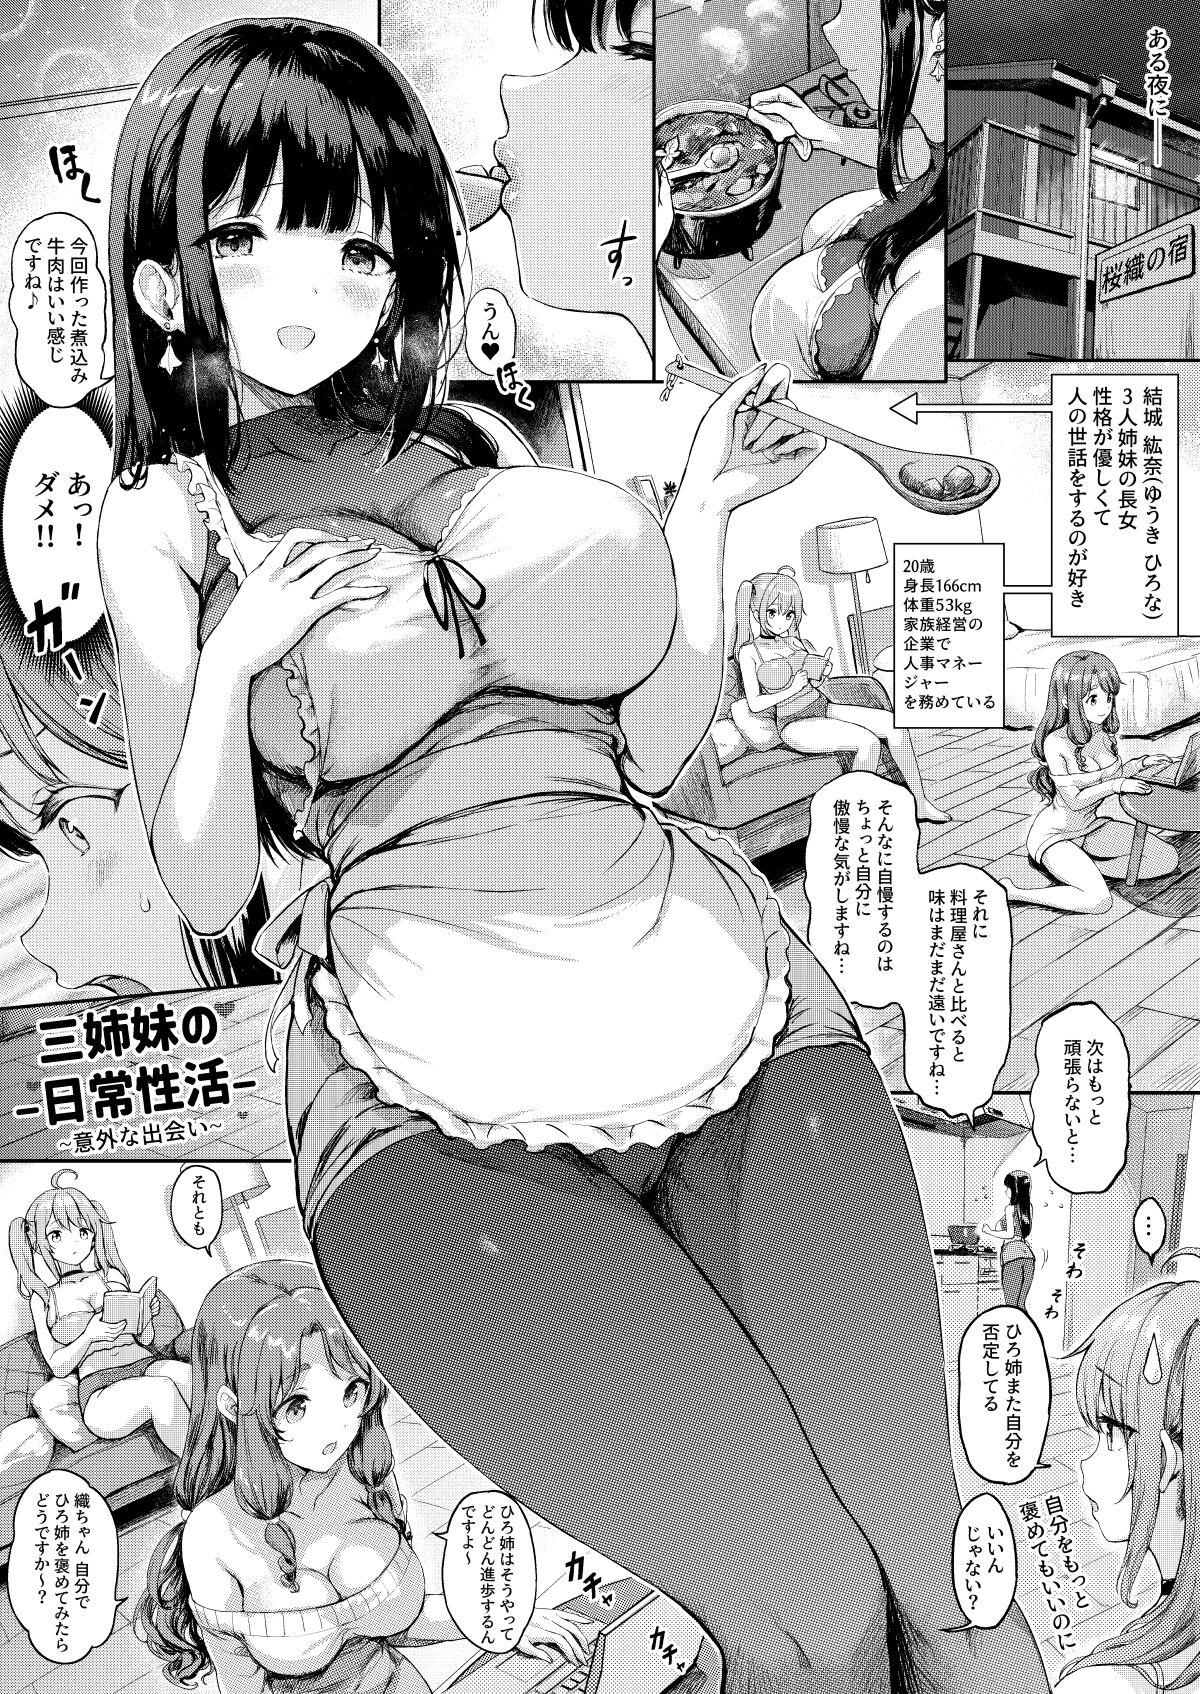 Outside Sanshimai Manga ep1 p1-9 - Original Latex - Page 10